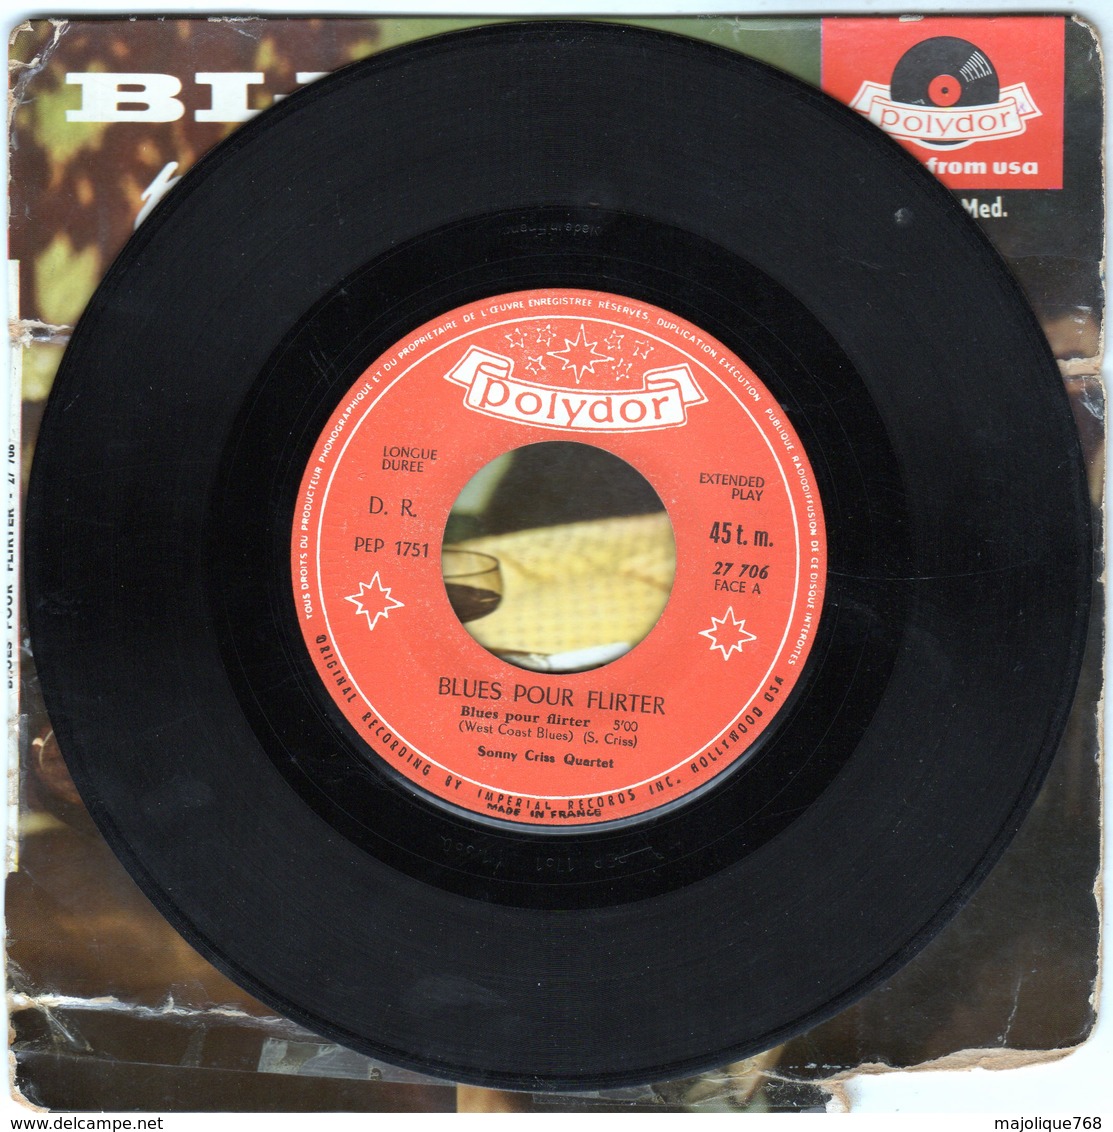 Sonny Criss - Blues Pour Flirter - These Foolish Things - Polydor 27706 - 1960 - - Blues